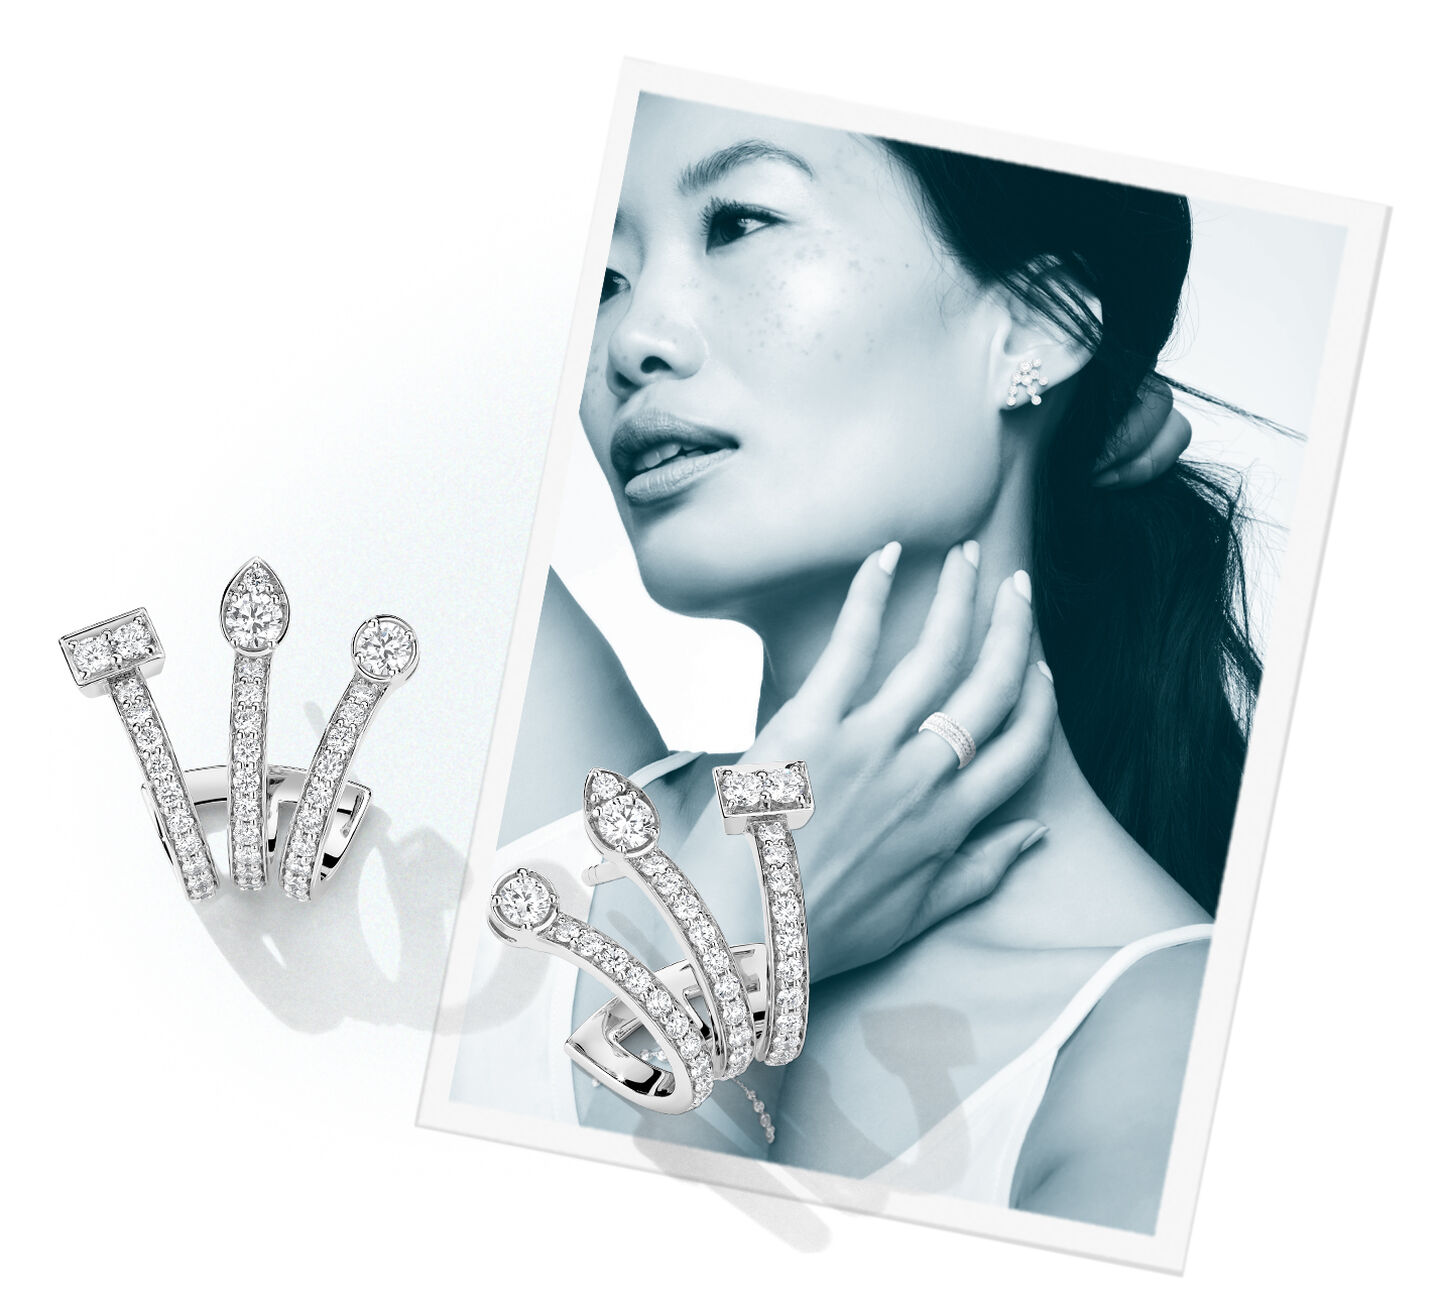 Birks Splash diamond earrings sitting on a photograph of a model 